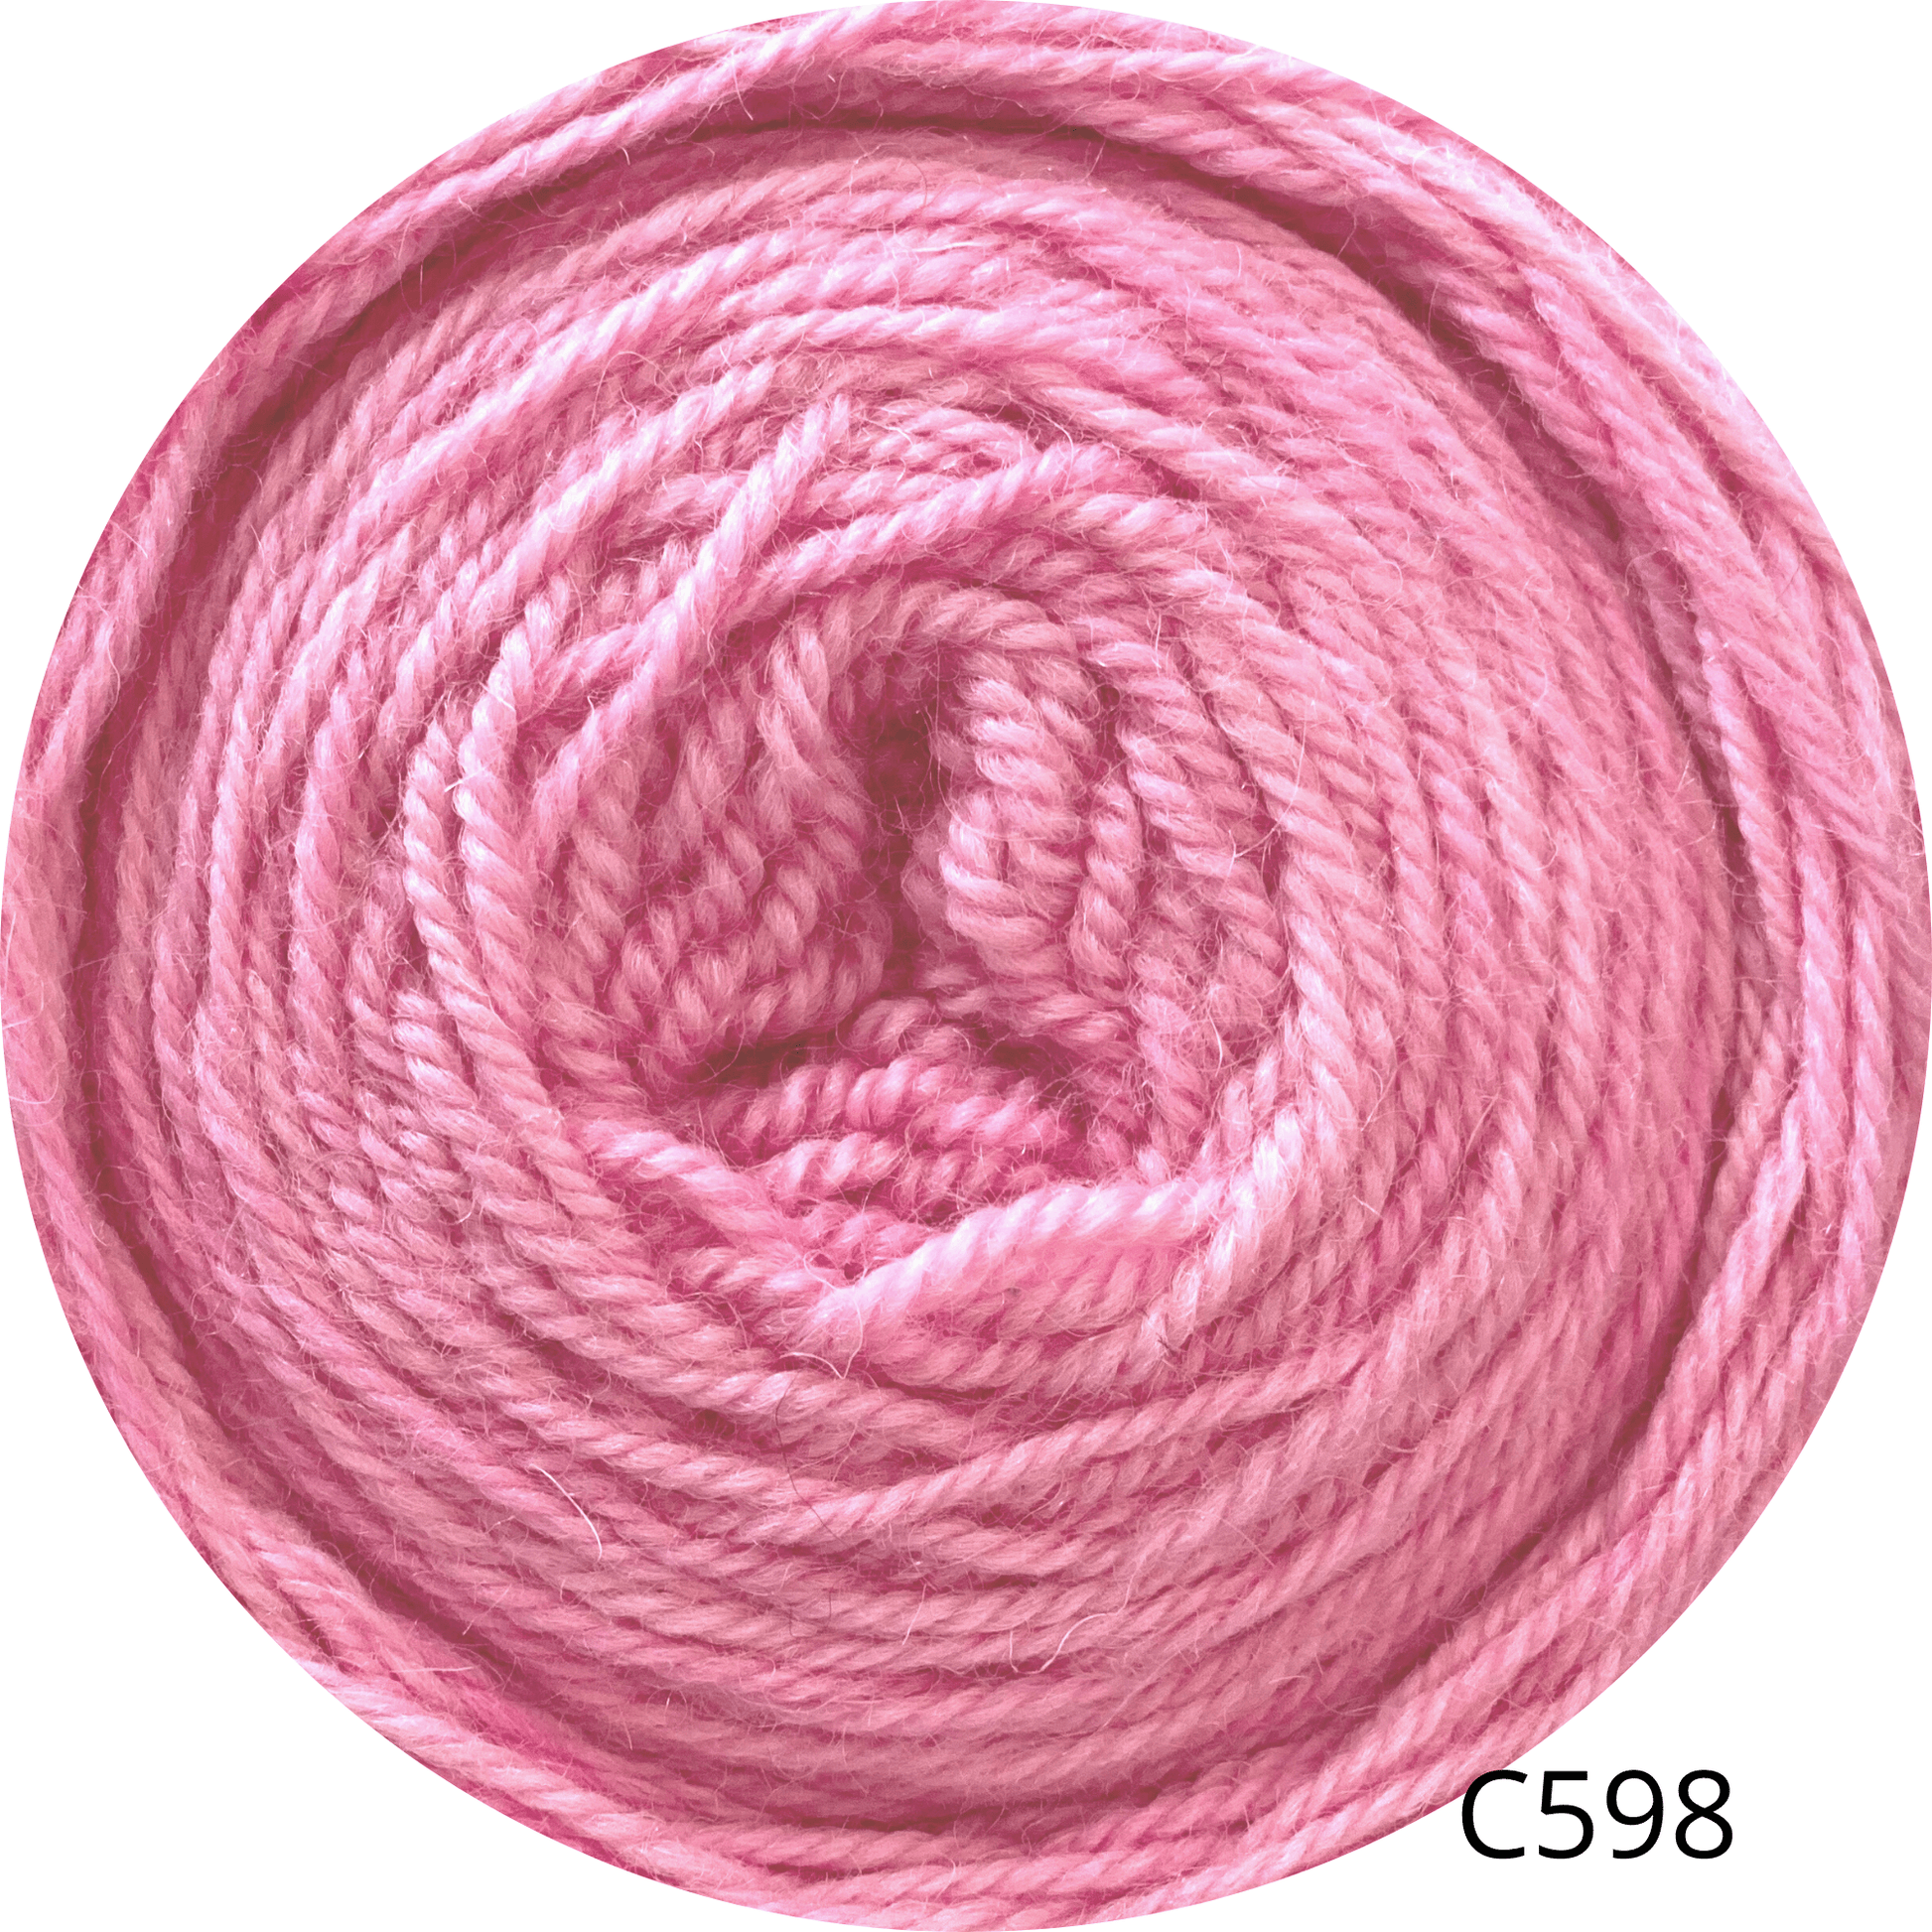 Lanabel Lana natural C598 lana natural delgada Creación Lana natural